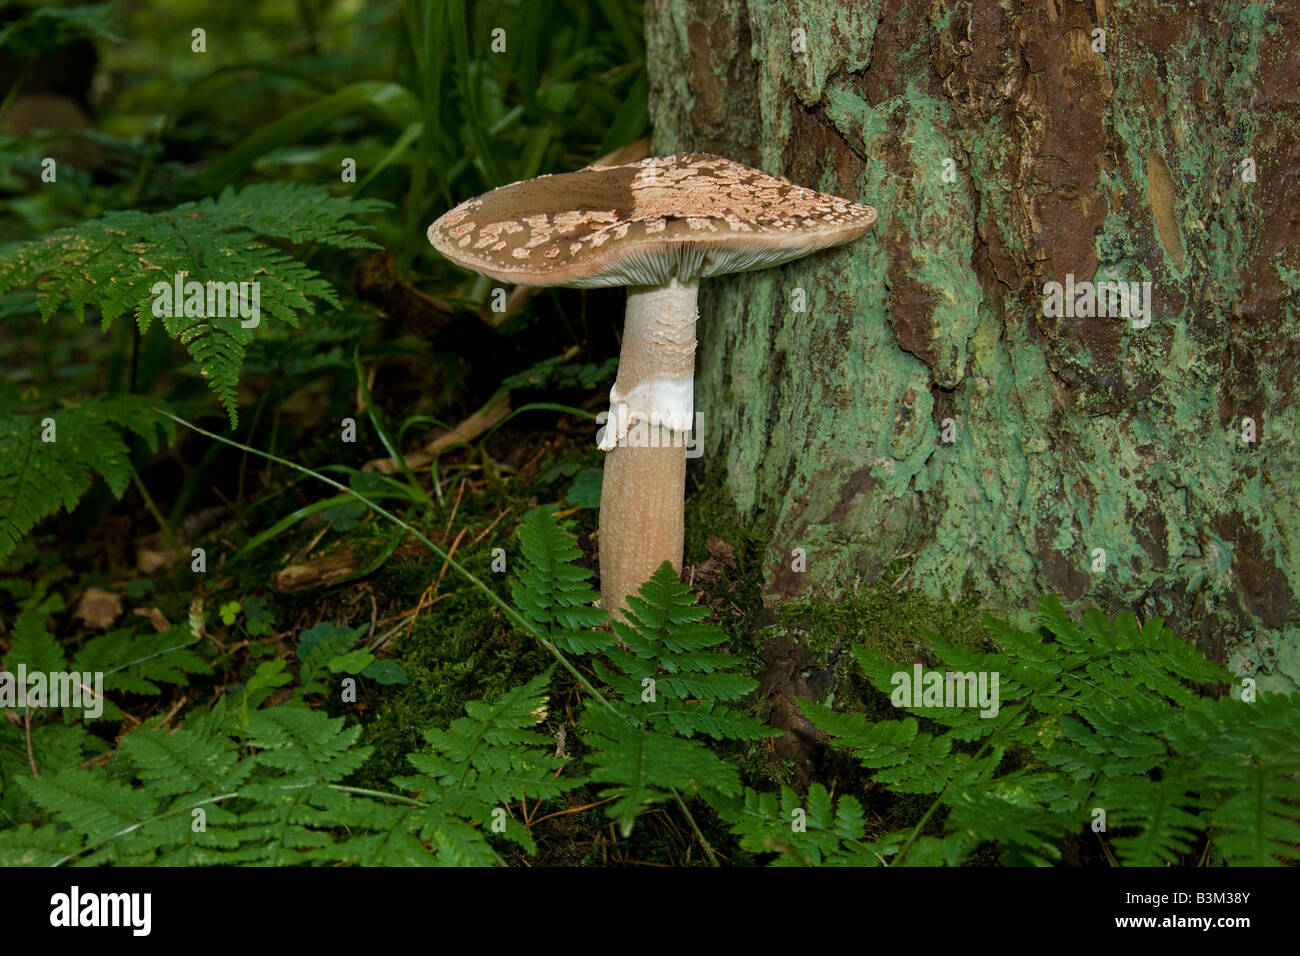 Fungi - The Panther - Amanita pantherina - Deadly poisonous. Stock Photo